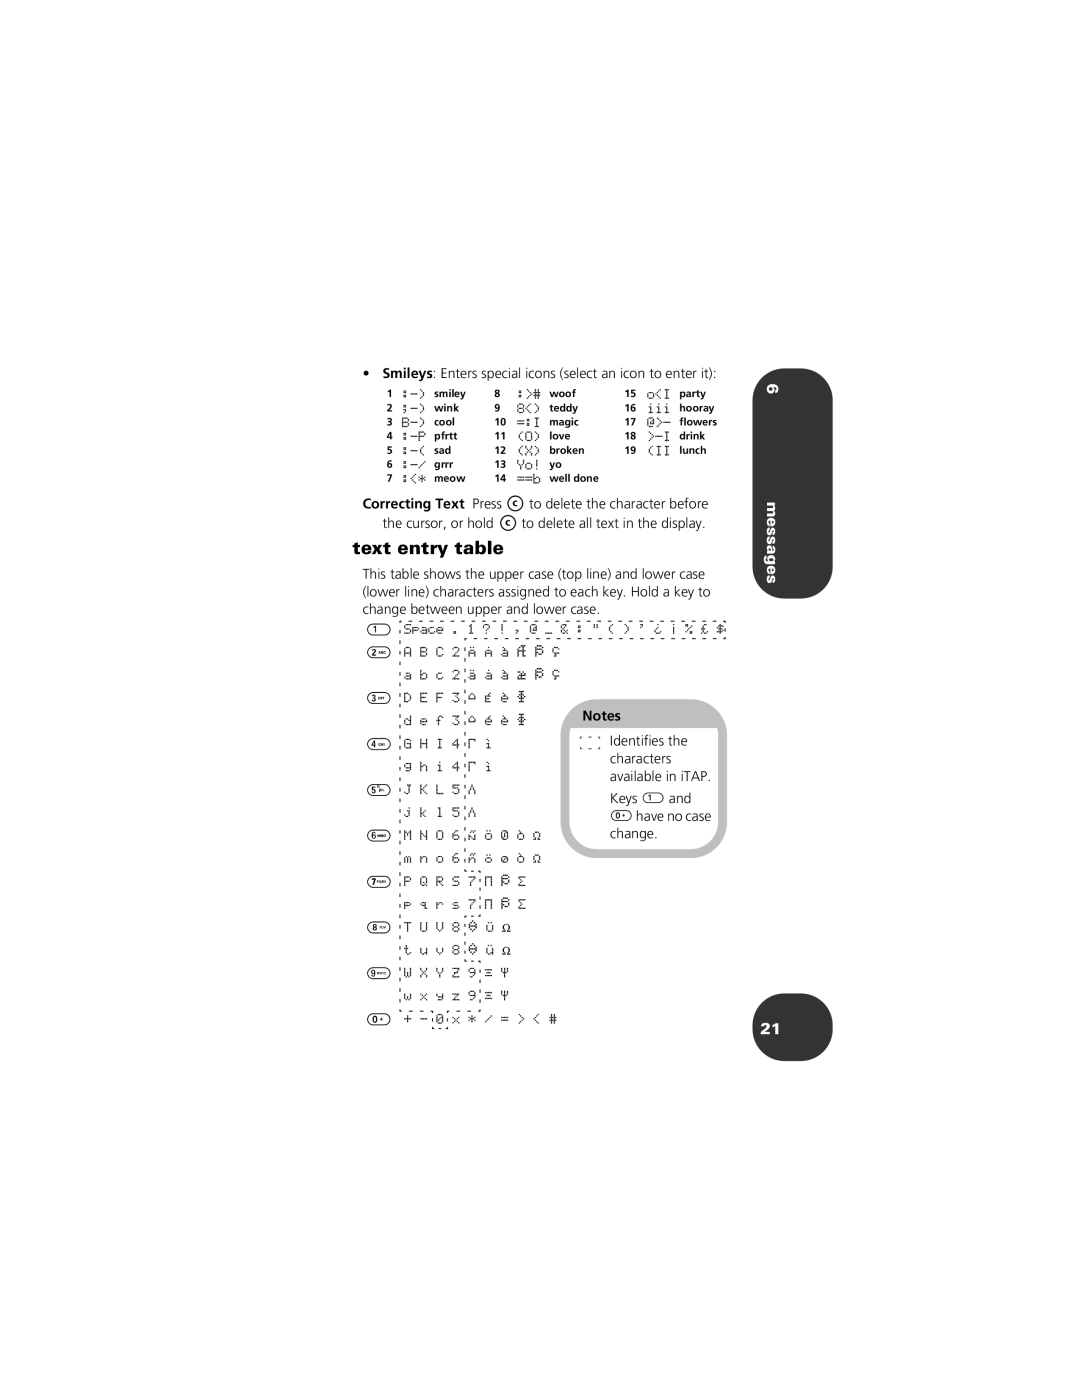 Motorola CELLPHONE manual Text entry table 